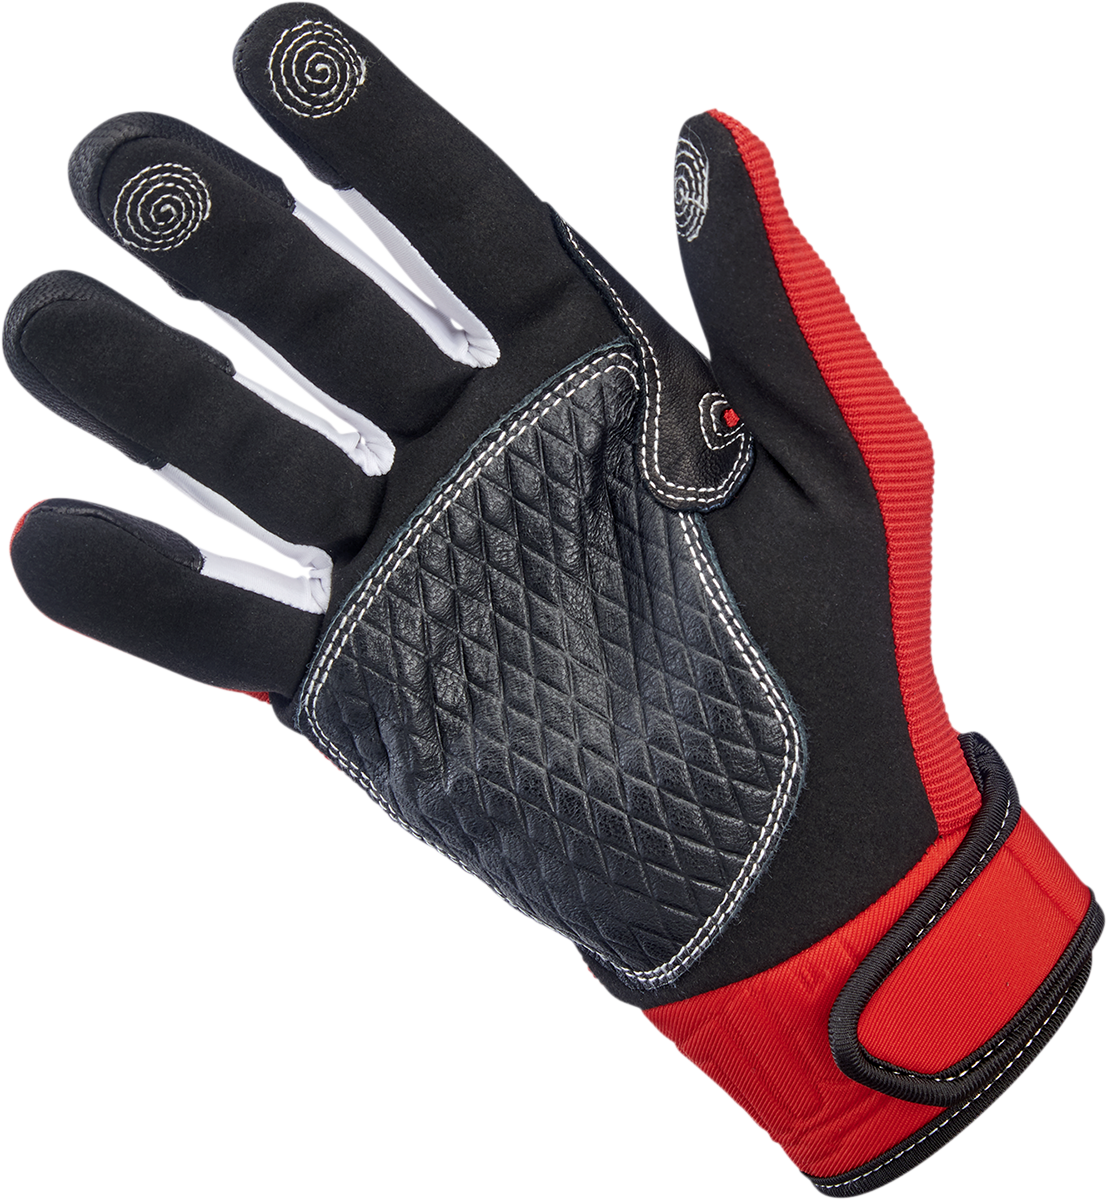 BILTWELL Baja Gloves - Red - Medium 1508-0801-303